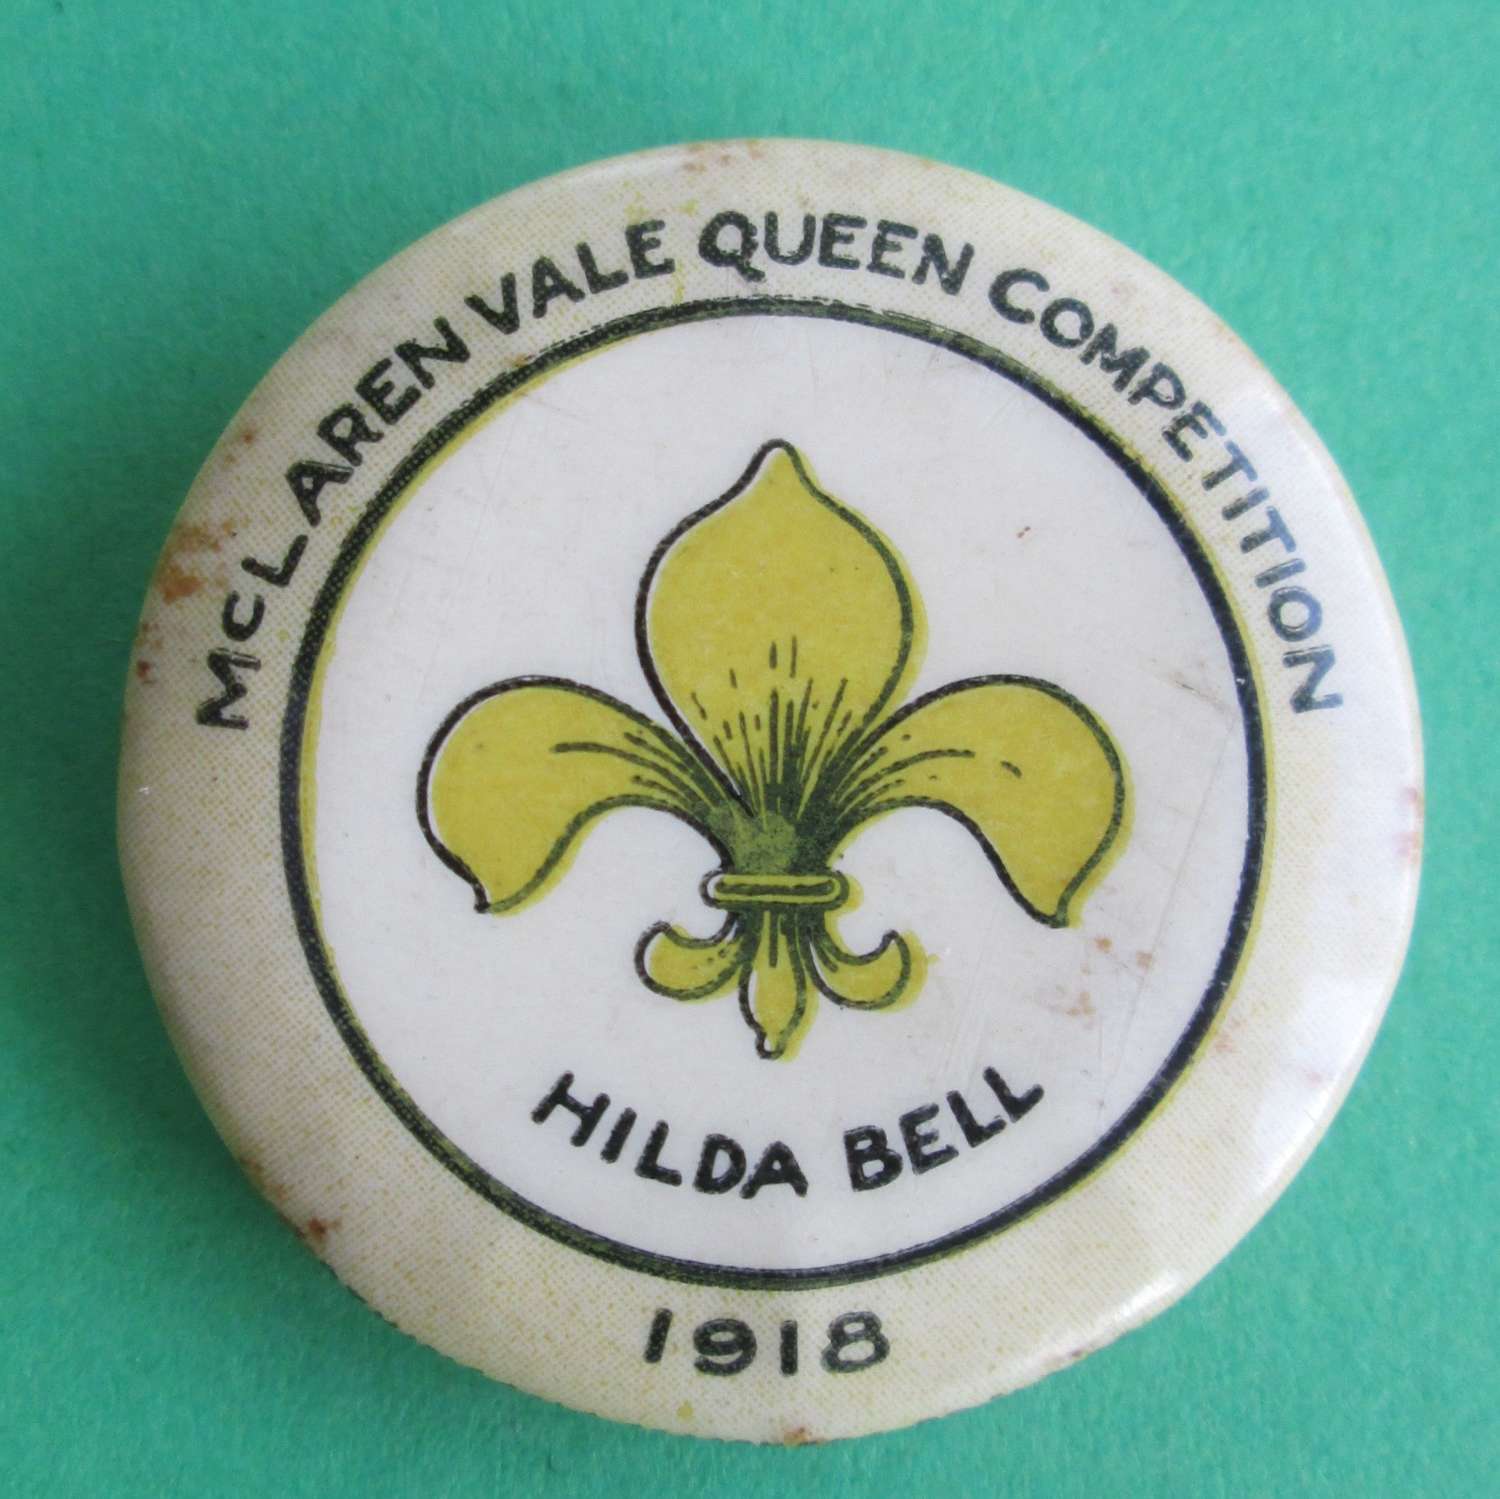 MC LAREN VALE QUEEN COMPETITION HILDA BELL PIN BADGE 1918